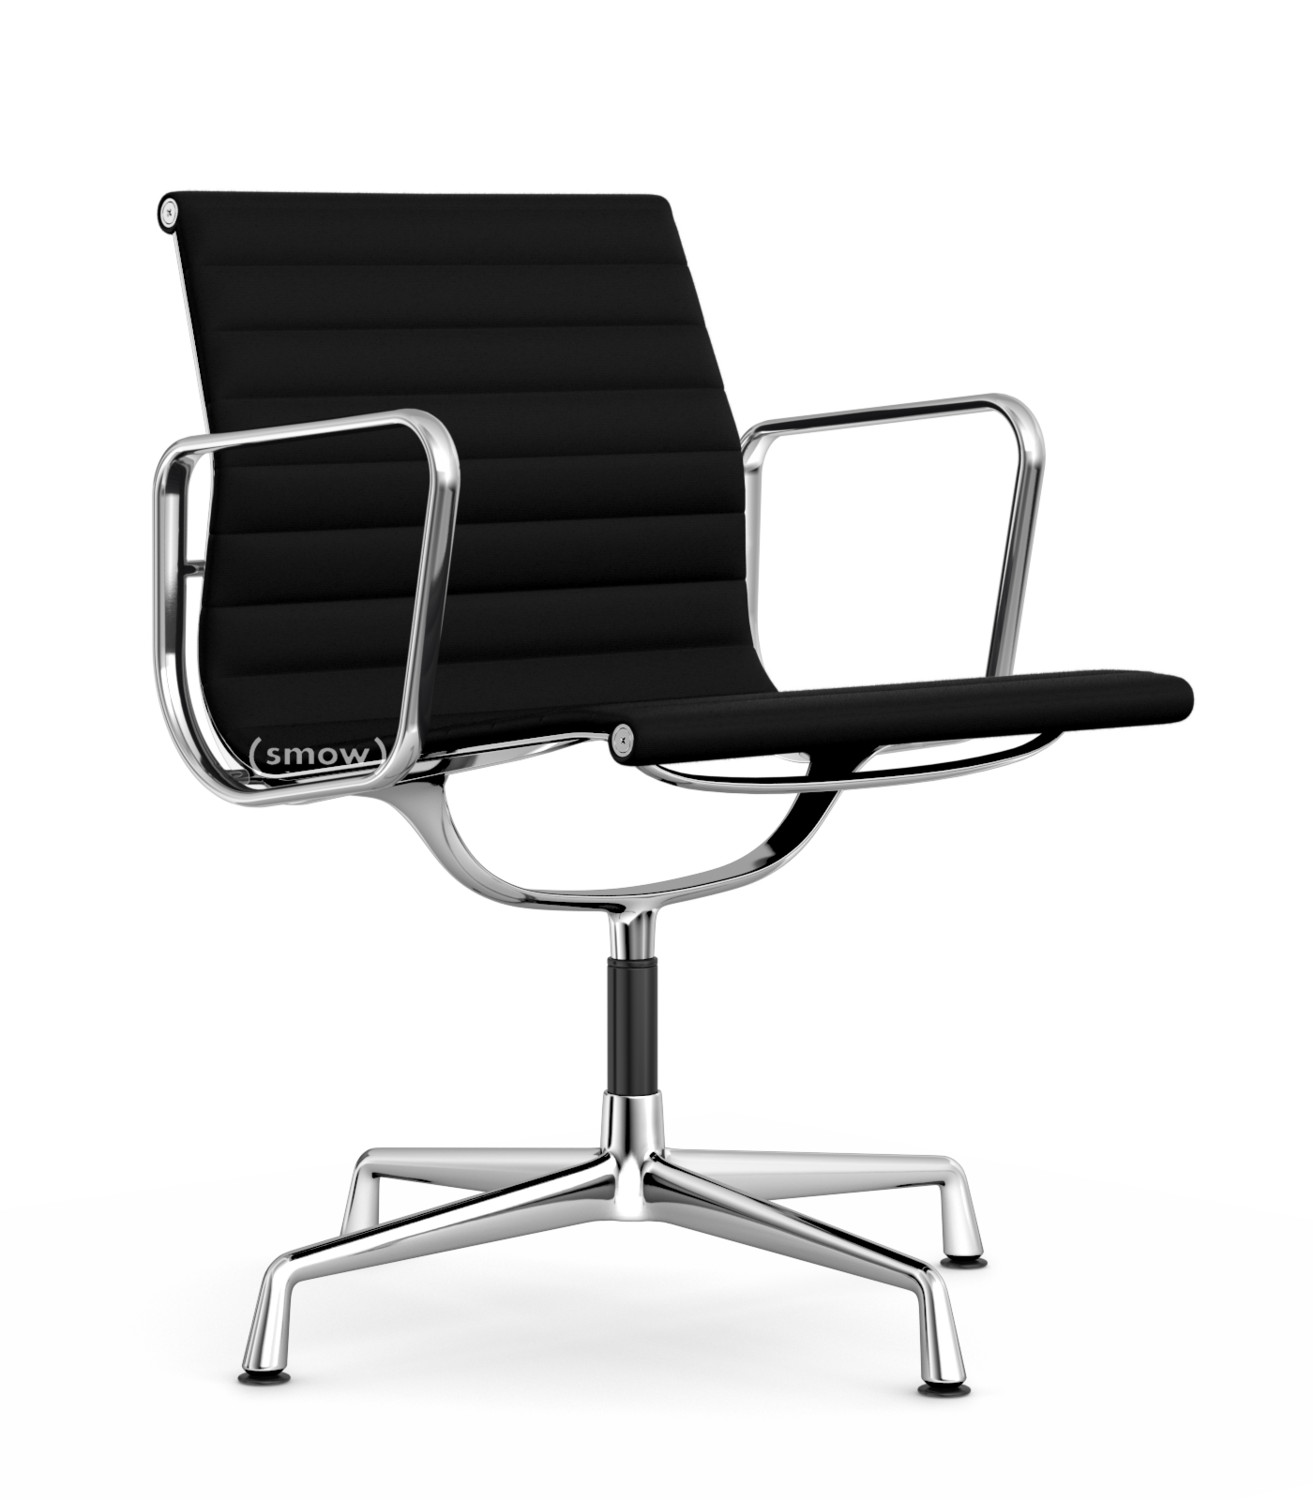 Vitra Aluminium Group Ea 107 Ea 108 By Charles Ray Eames 1958 Designer Furniture By Smow Com